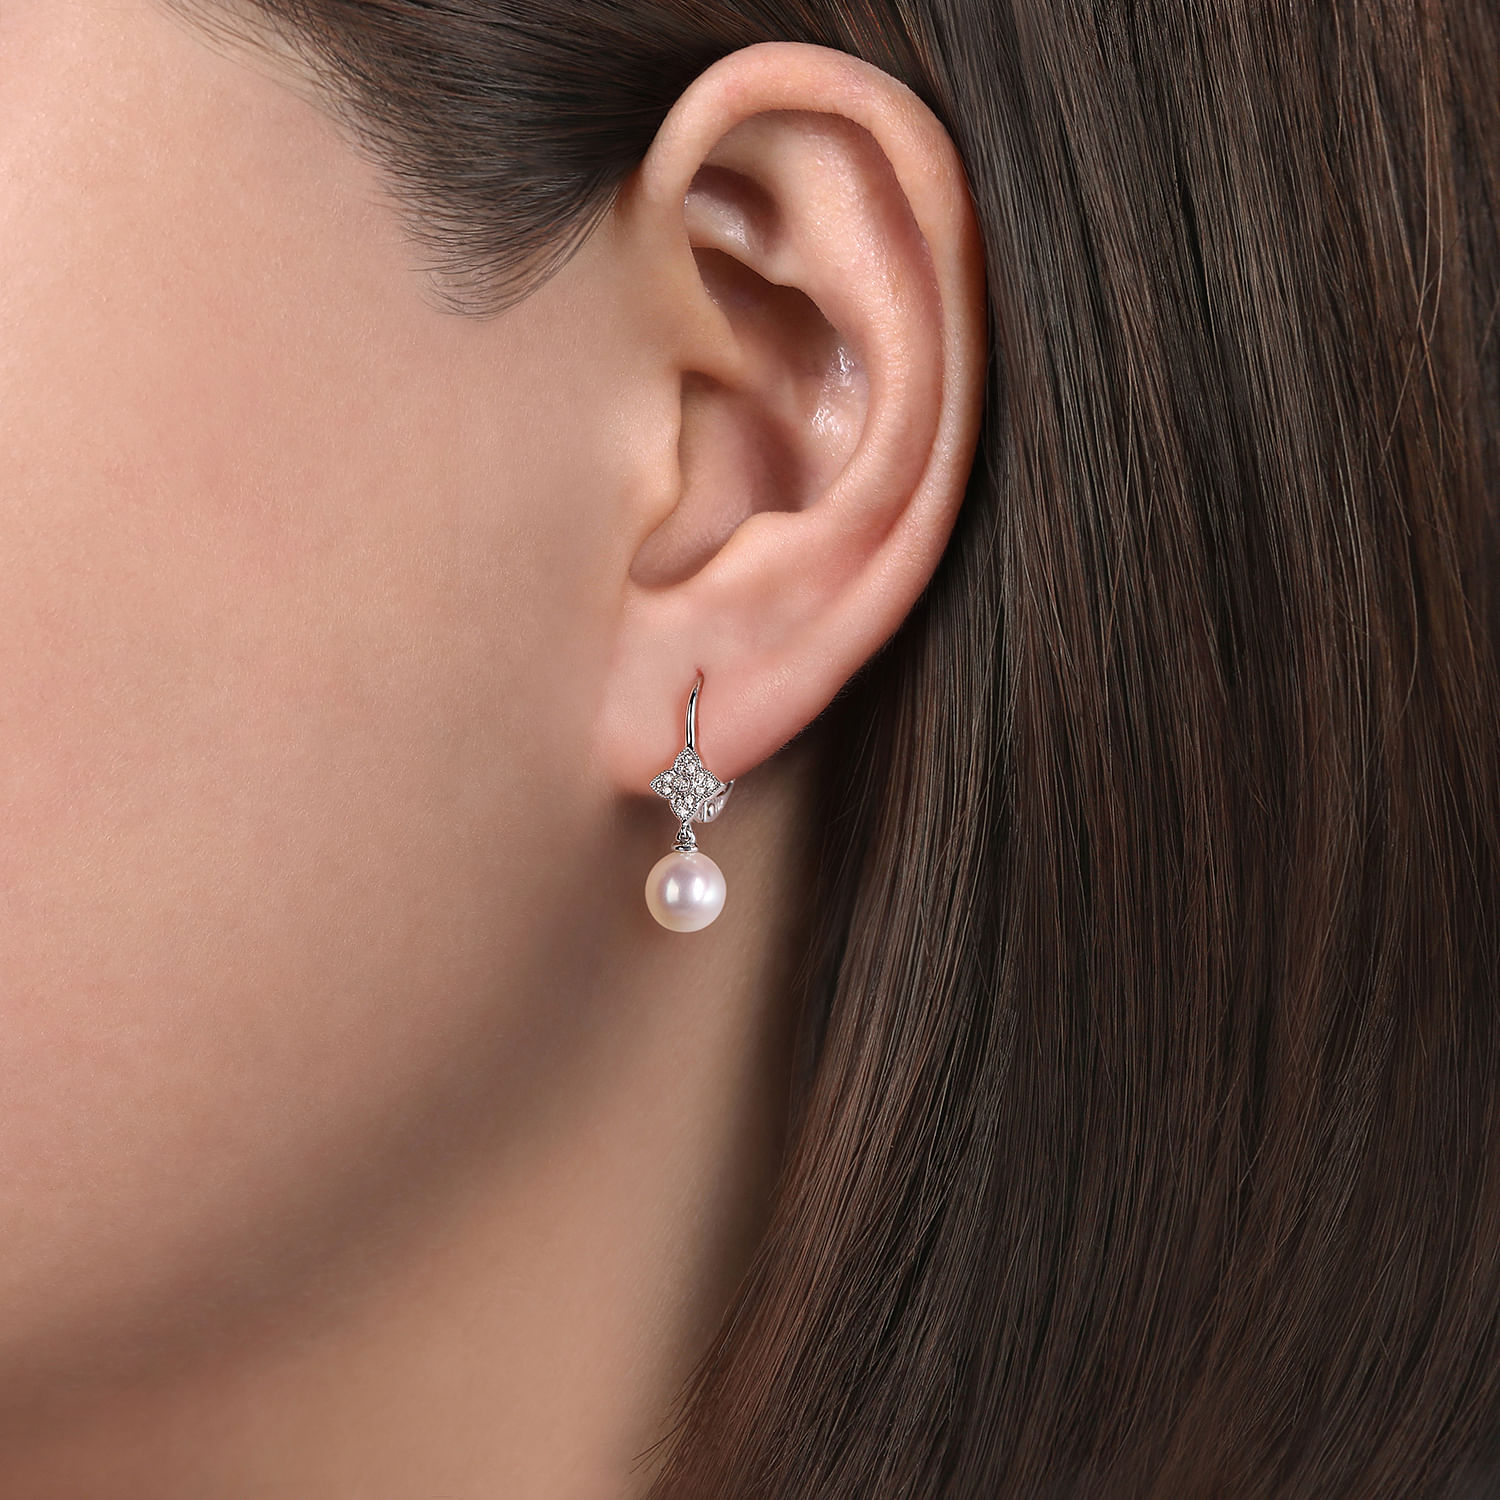 14K White Gold Floral Diamond Pearl Drop Earrings